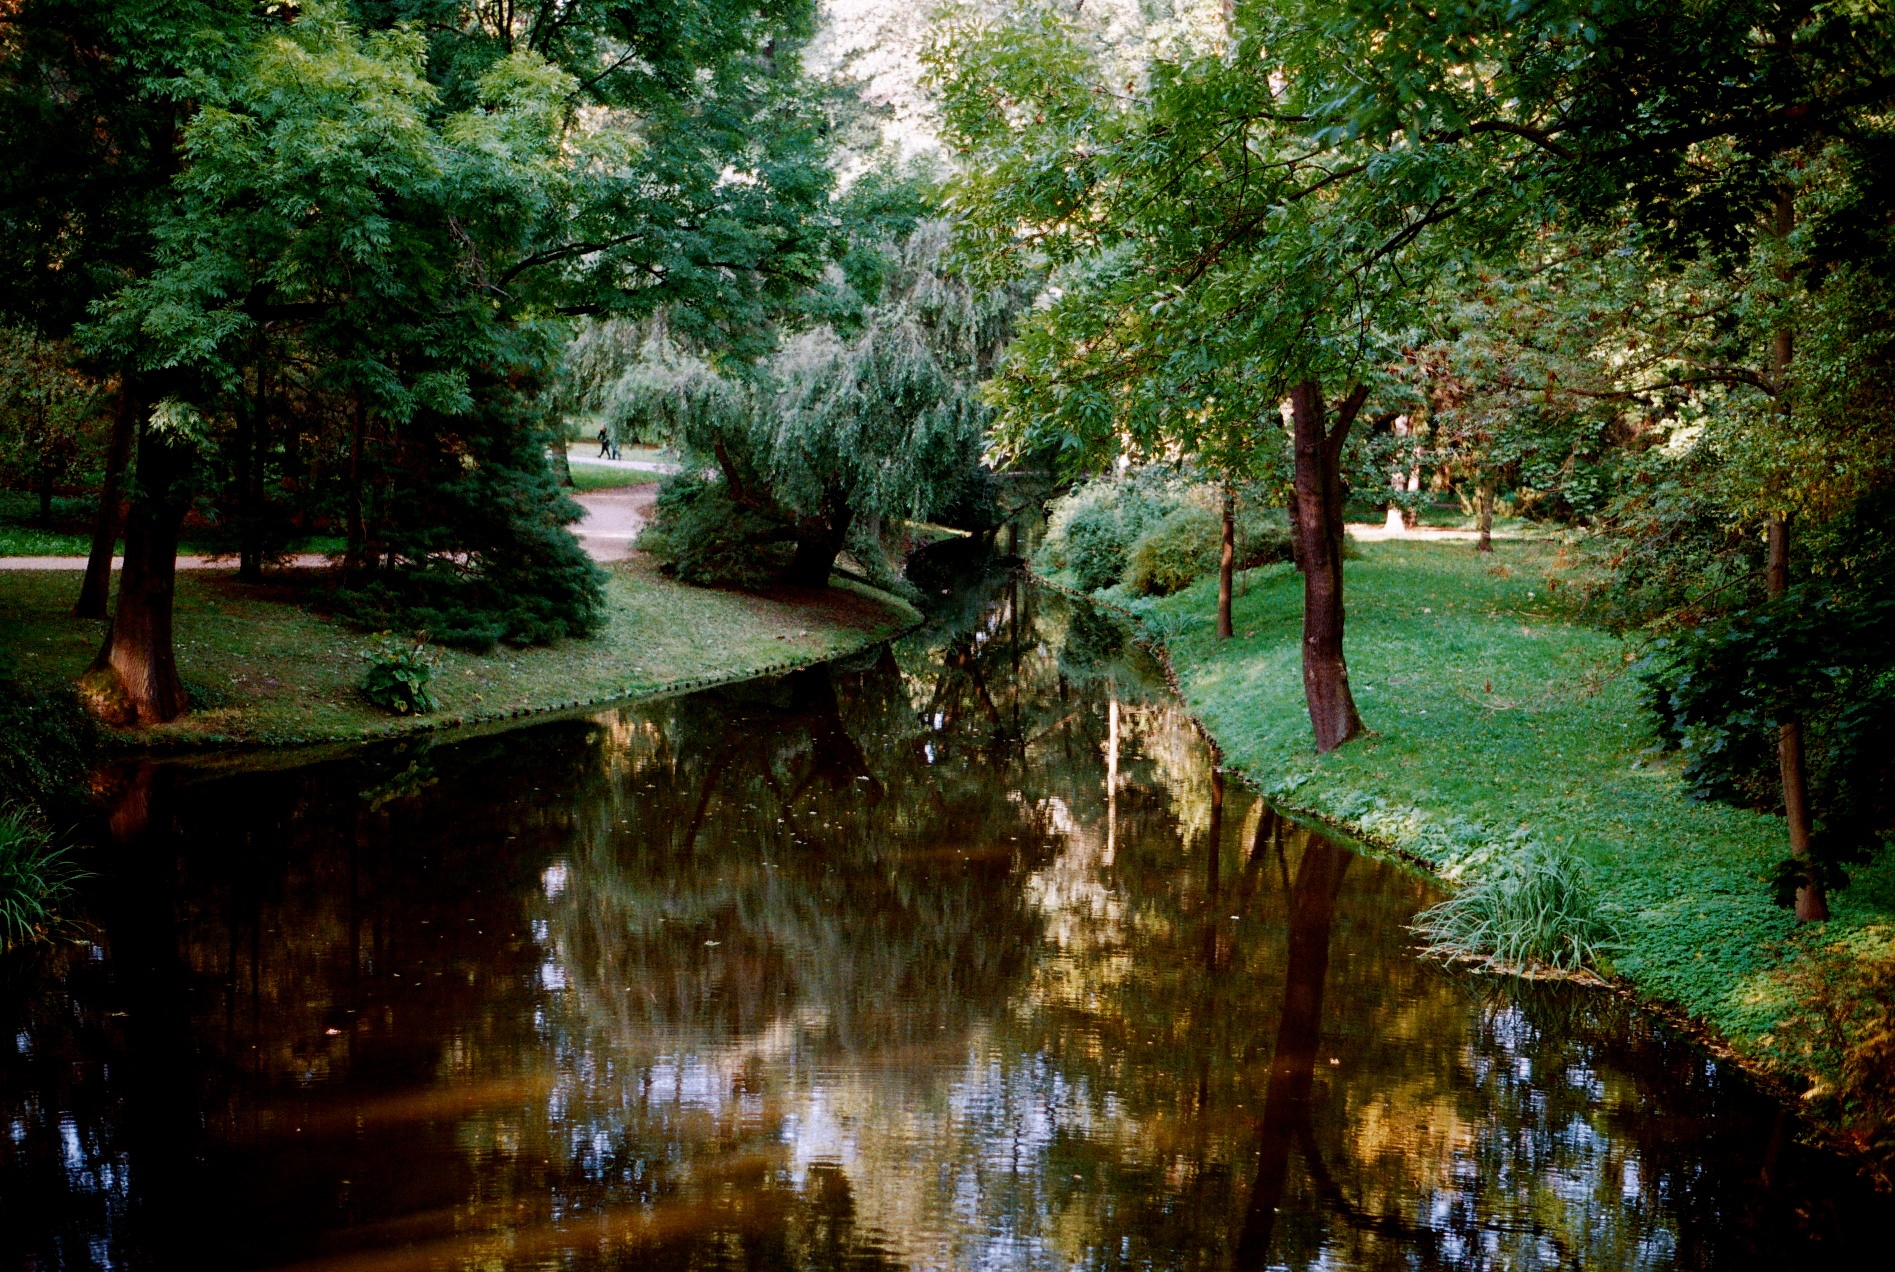 Łazienki Park in Warsaw, Poland.